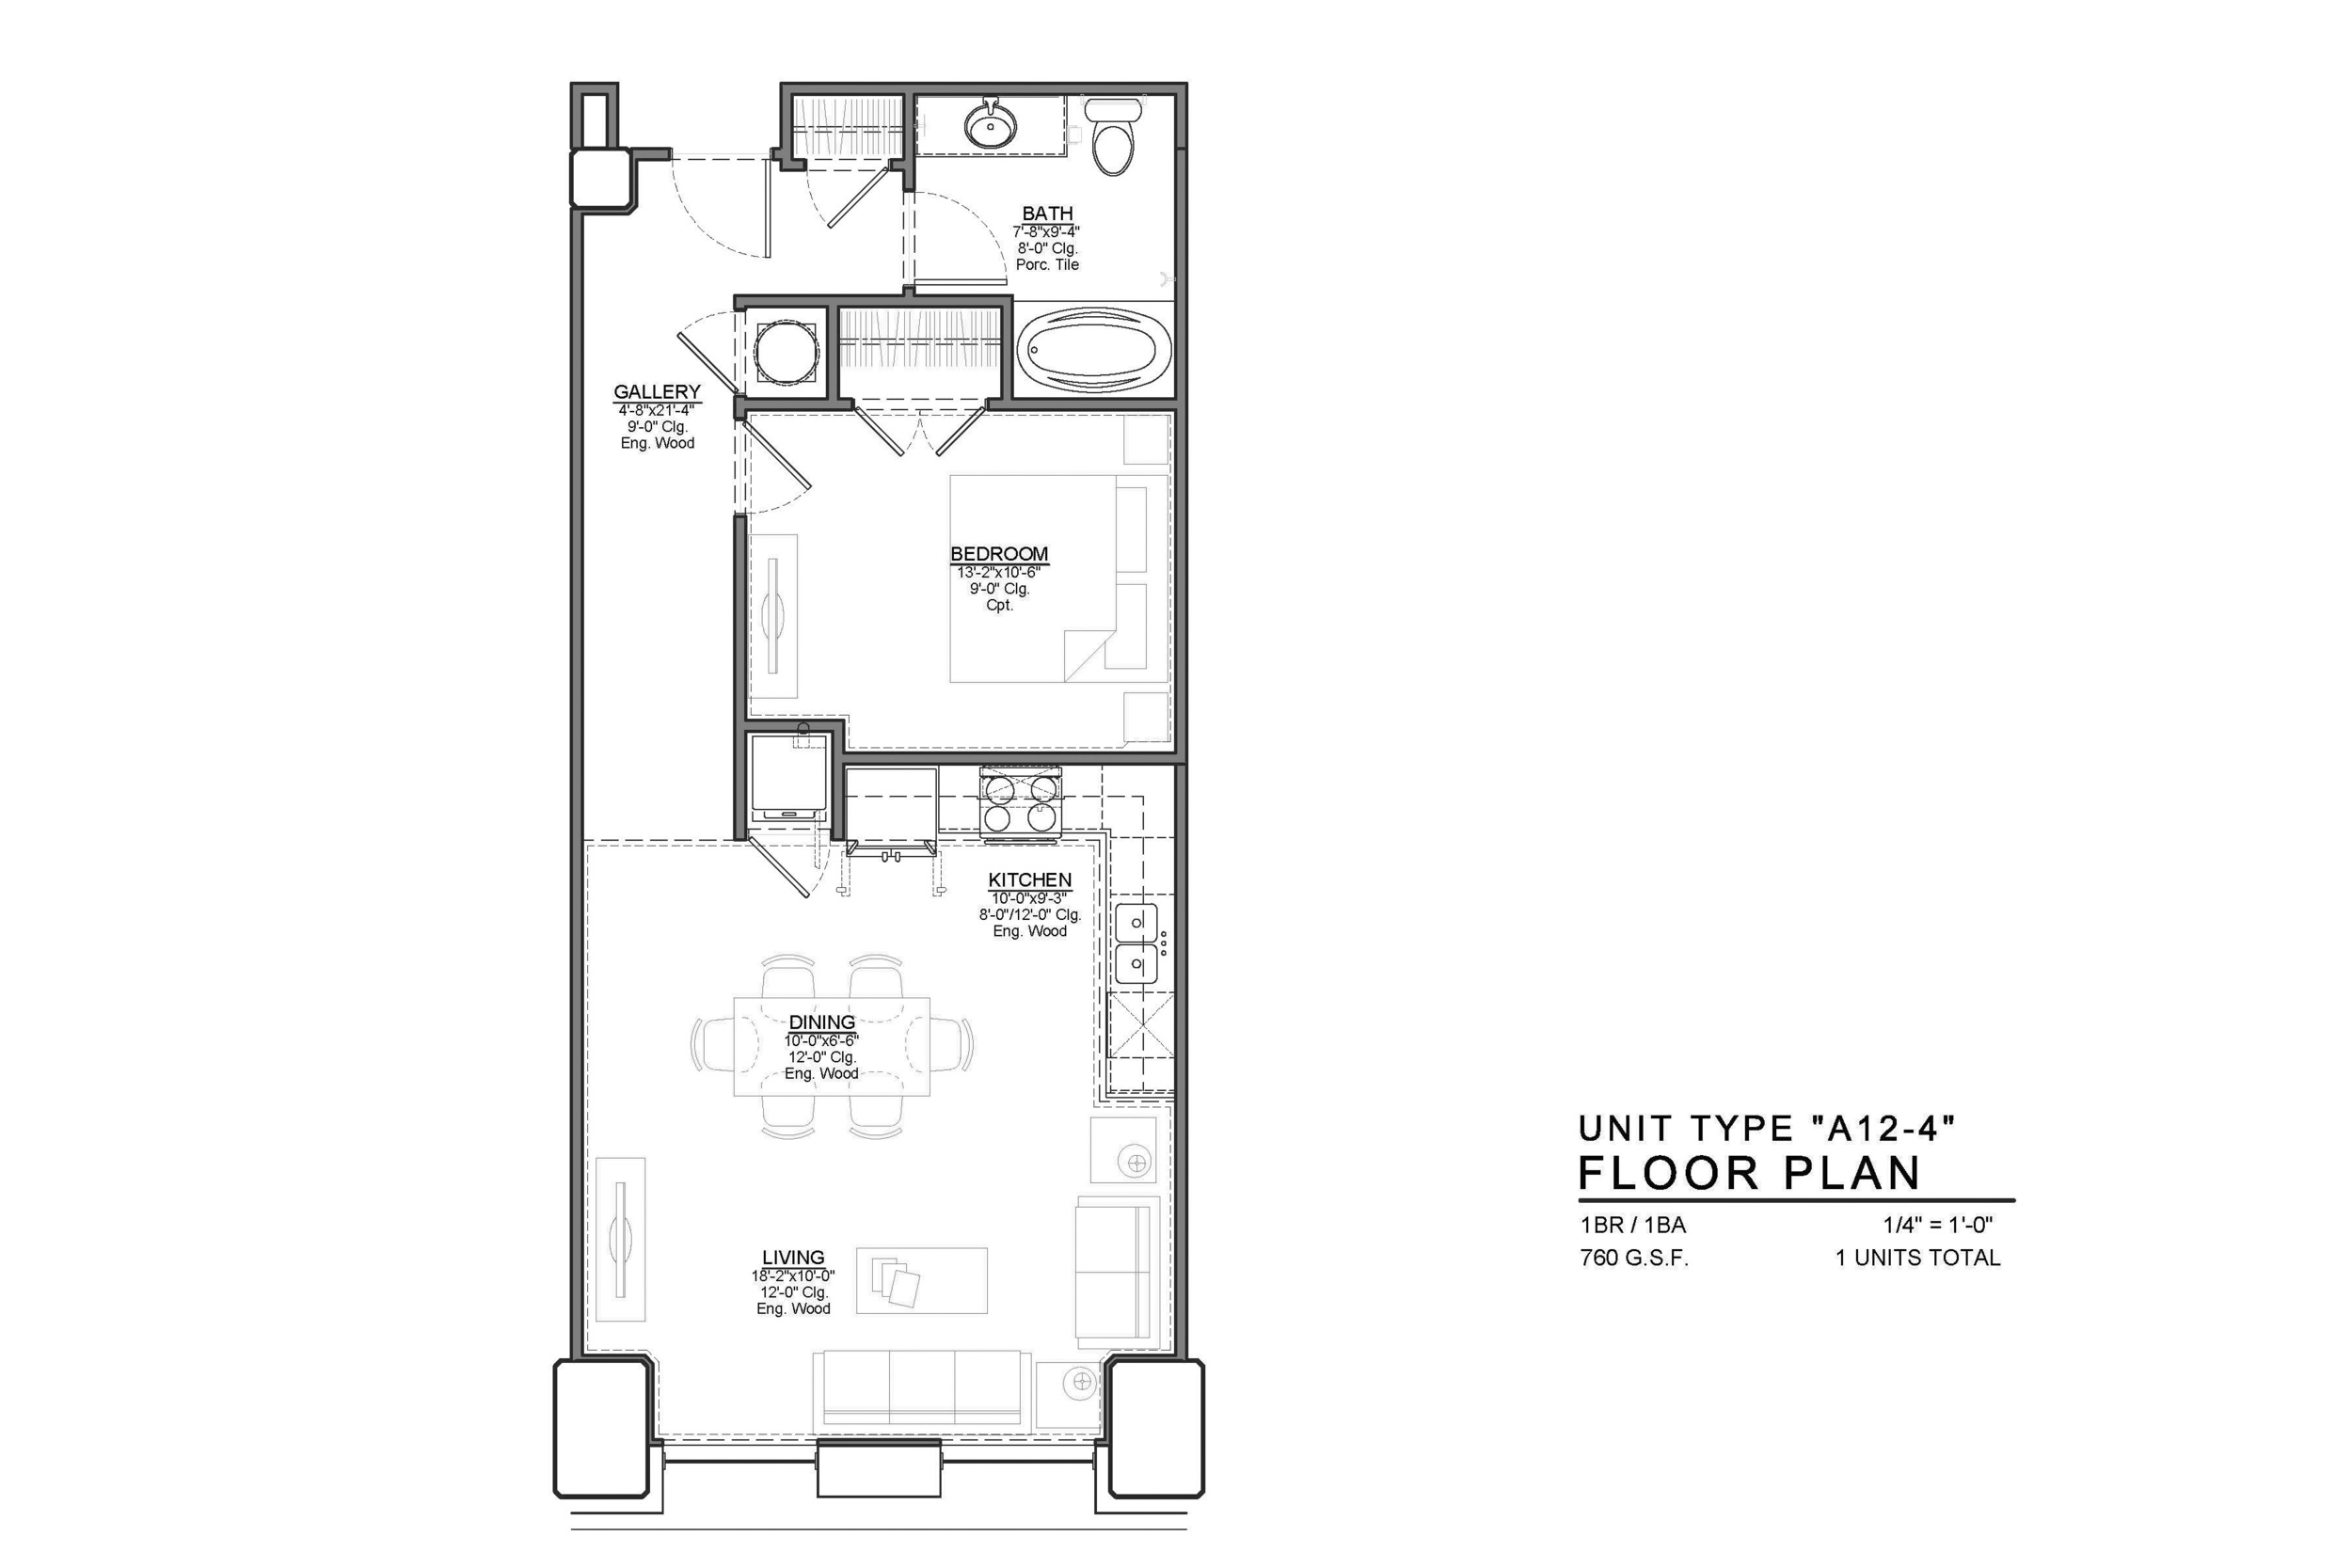 A12-4 FLOOR PLAN: 1 BEDROOM / 1 BATH